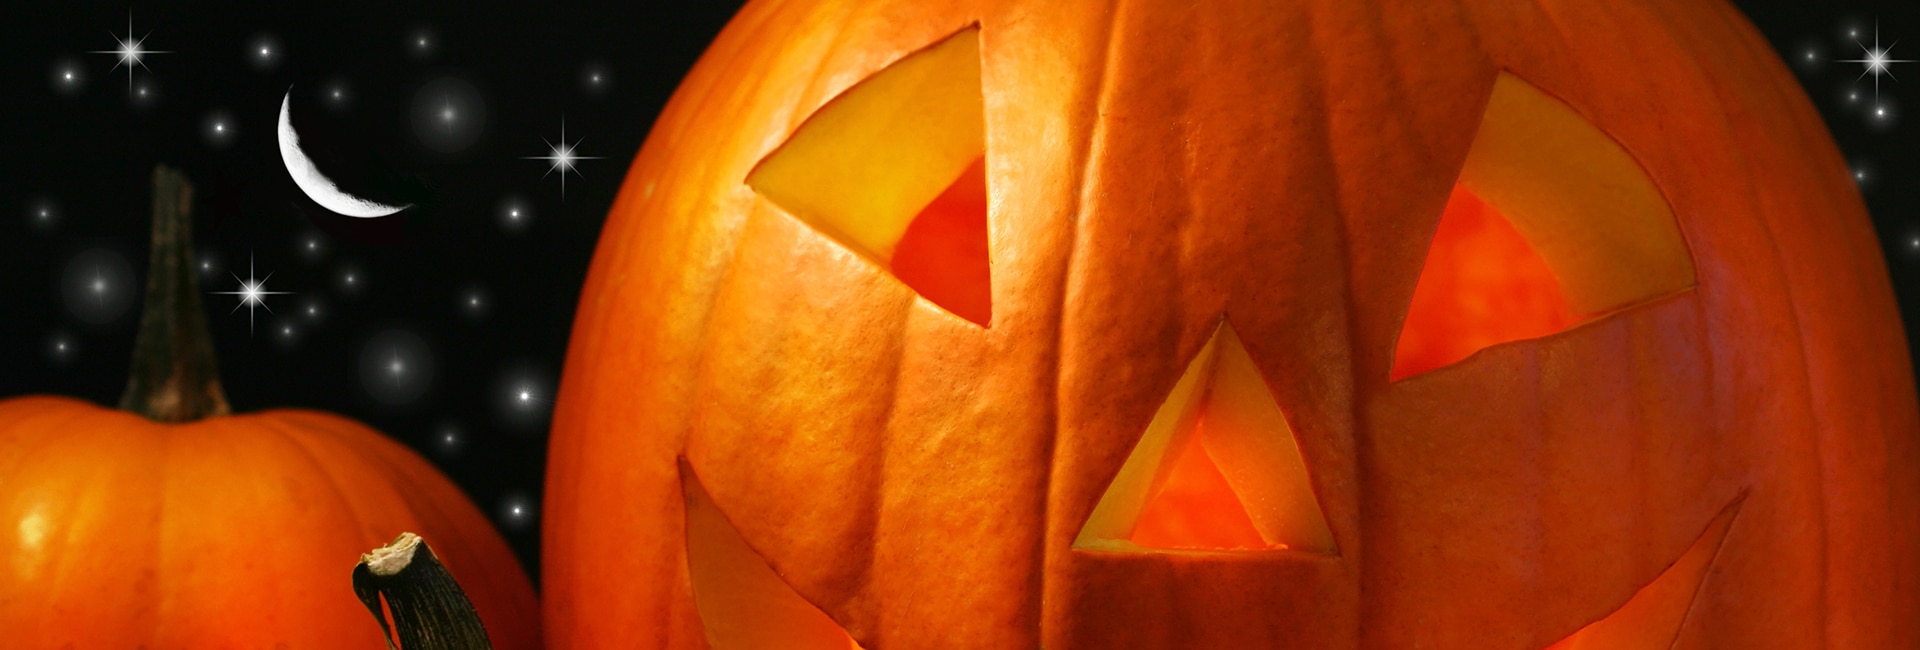 Carved-pumpkin